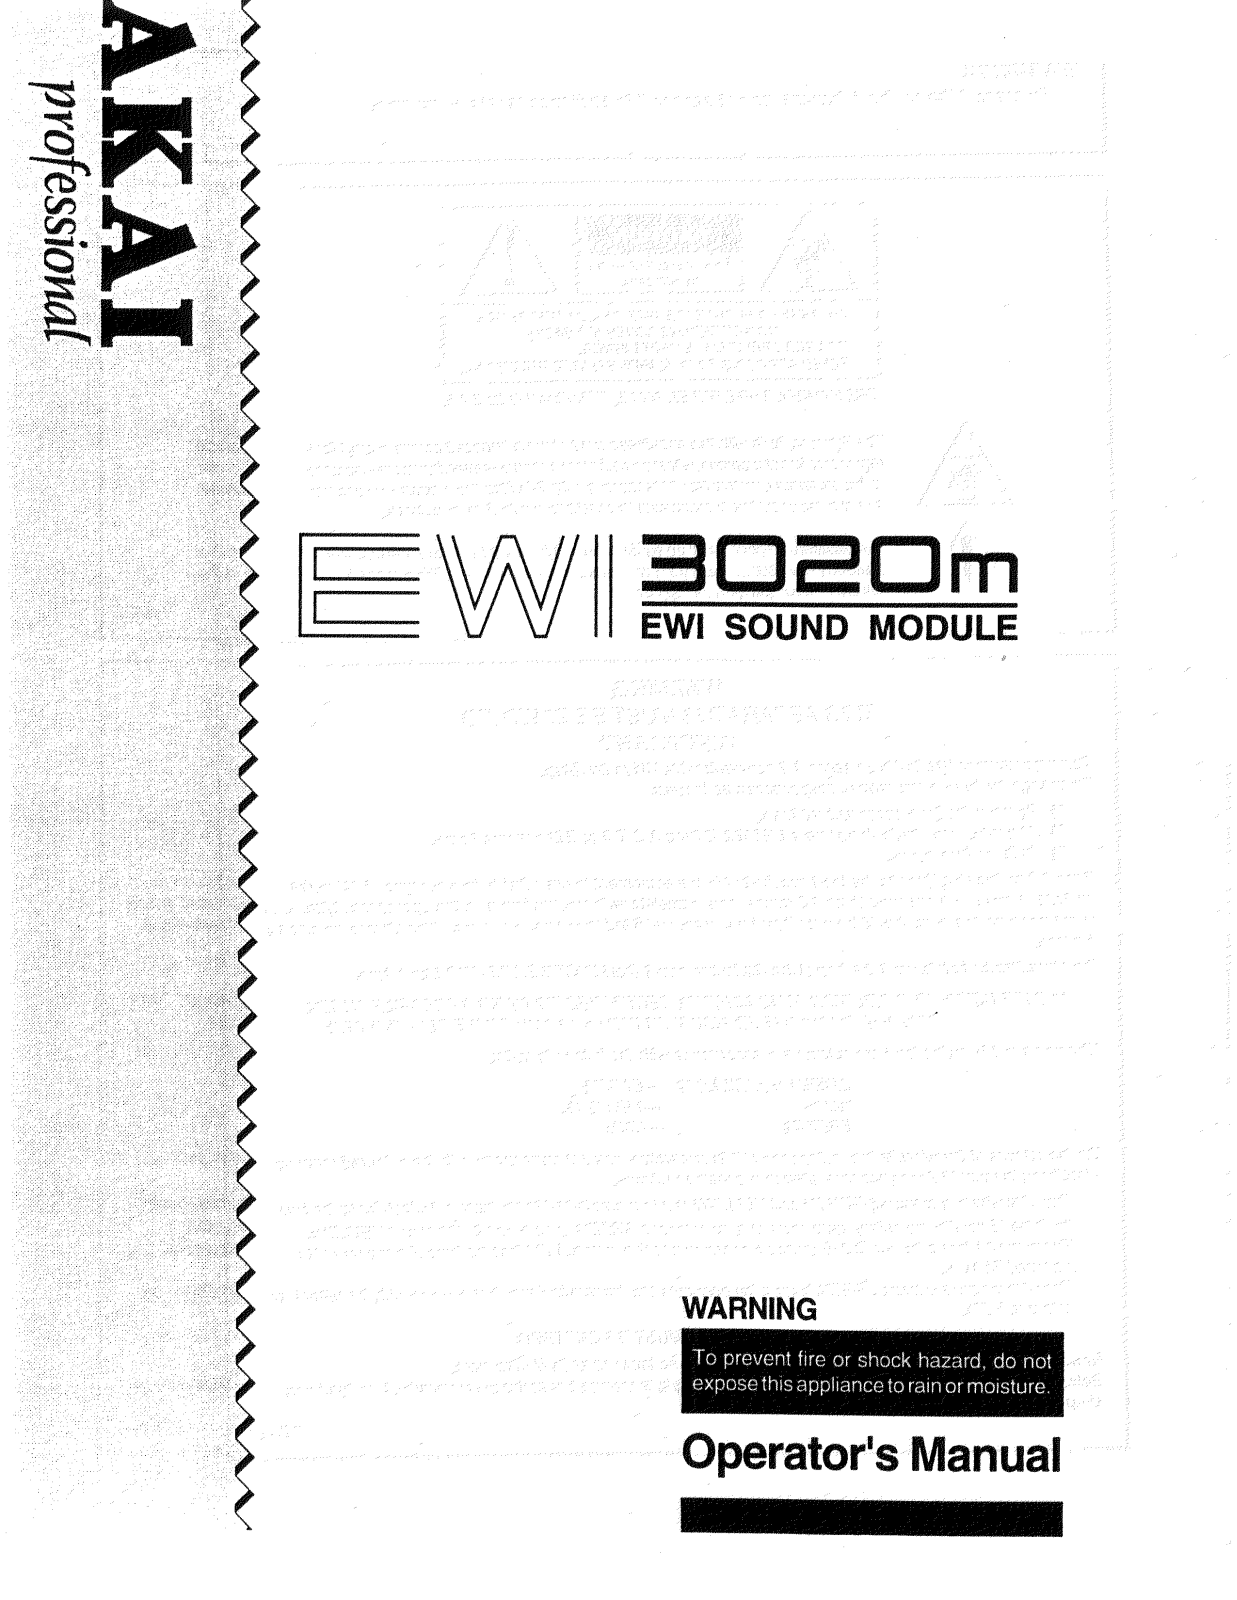 Akai EWI3020 User Manual